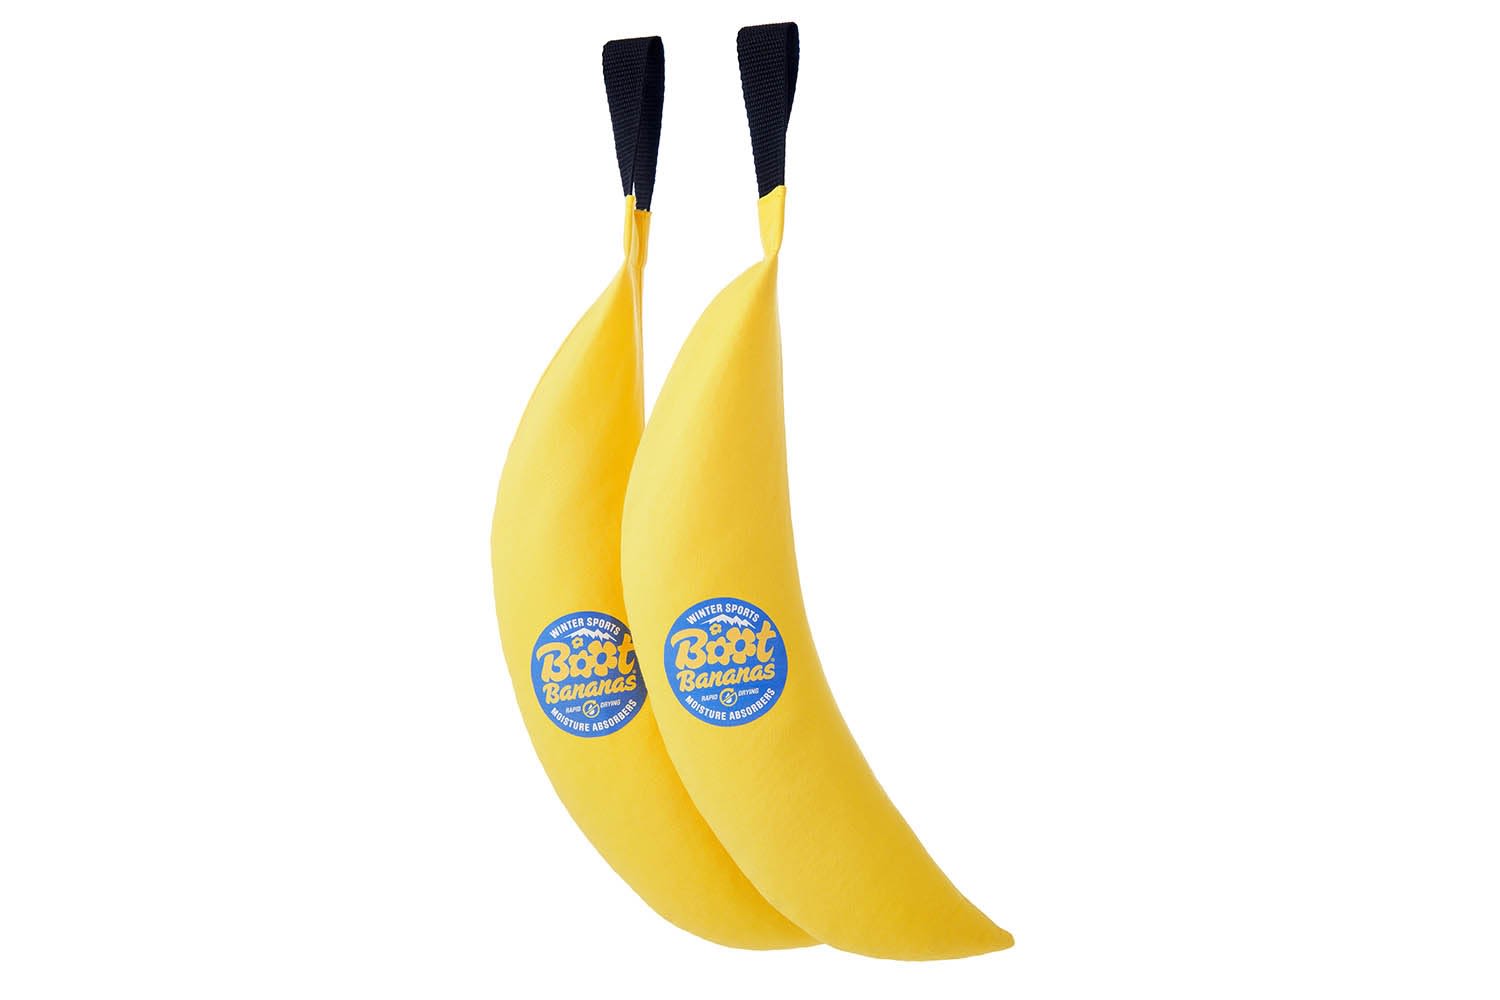 Boot Bananas Winter Sports Gelb, Schuhpflege, Größe One Size - Farbe Yellow BANANASW